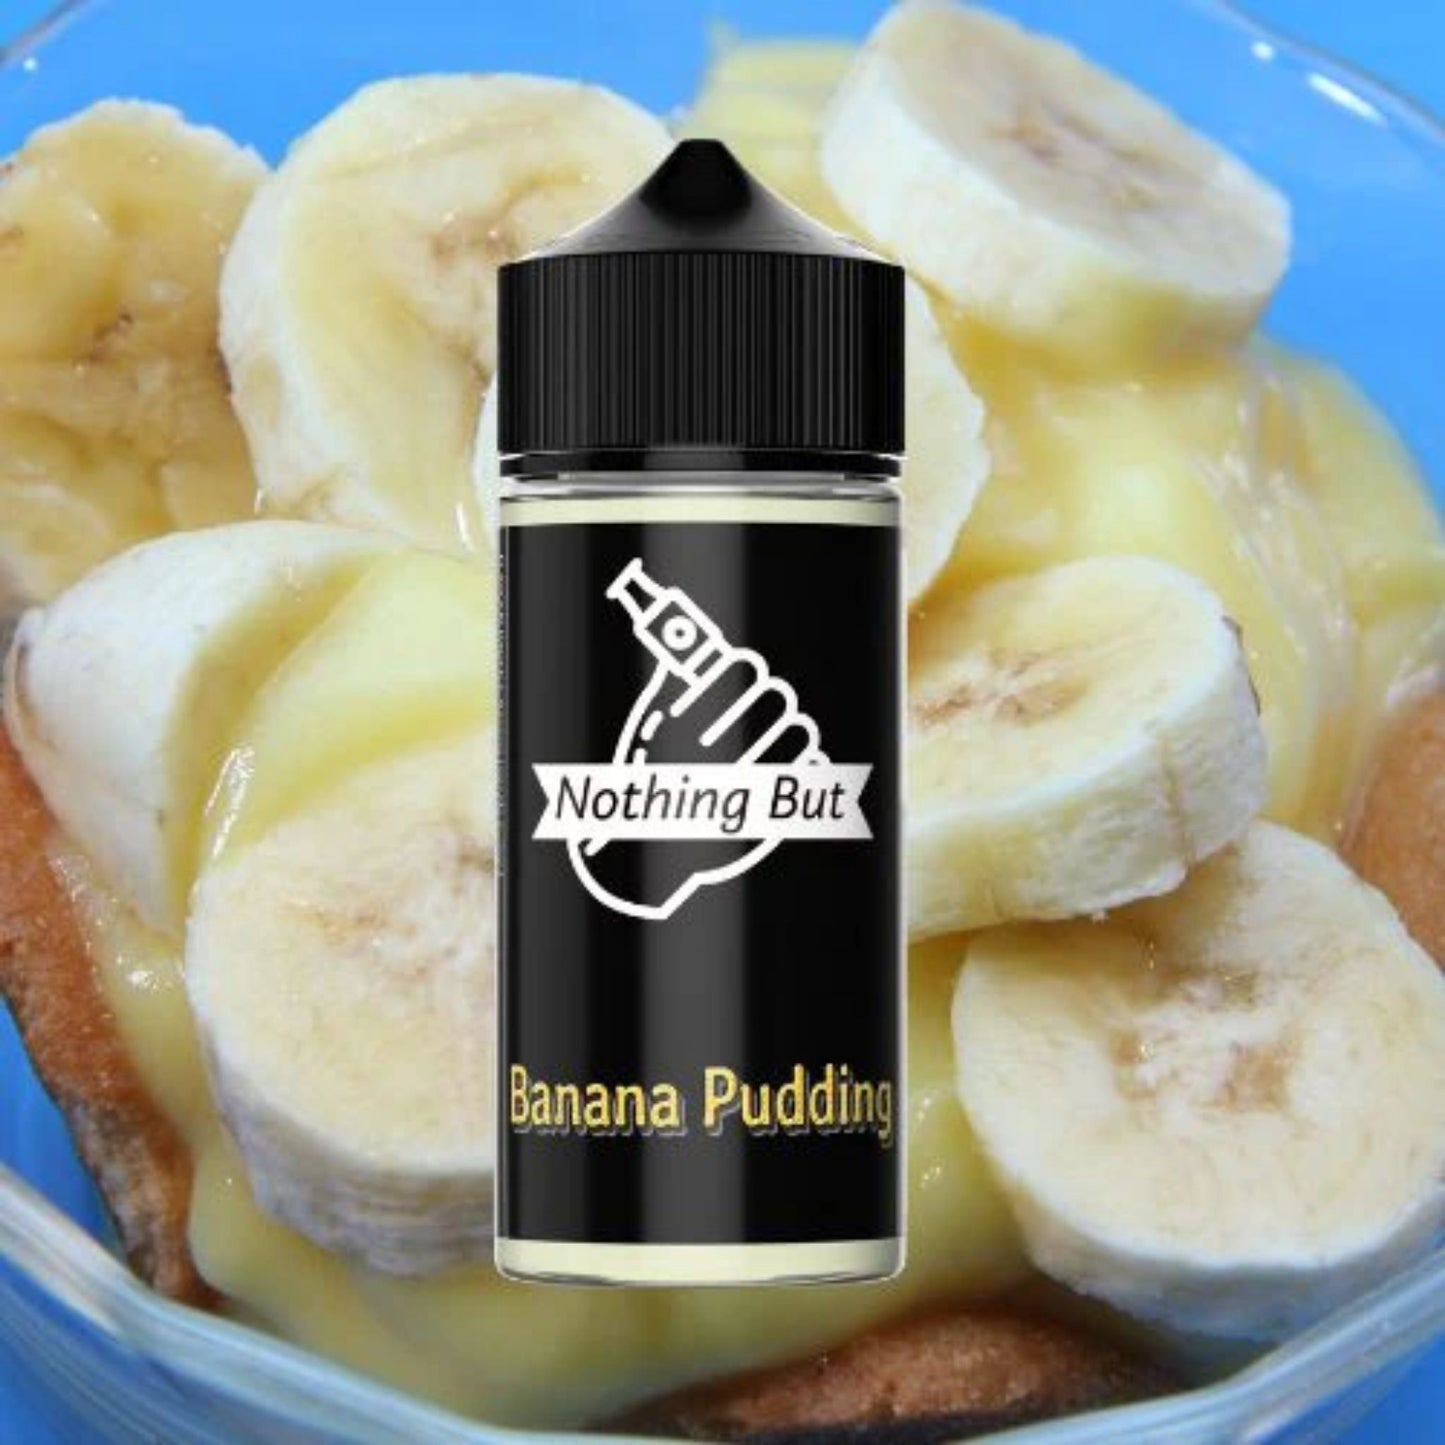 Nothing But | Banana Pudding | 120ml bottle with sliced banana on custard background